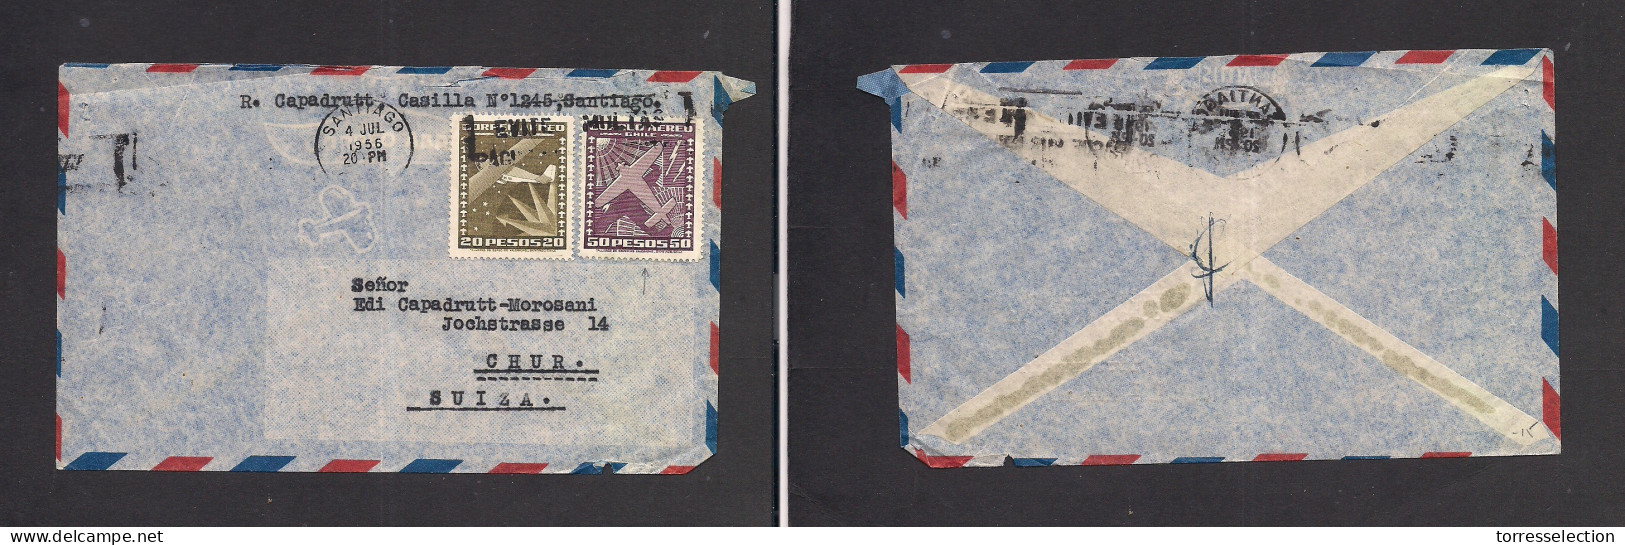 Chile - XX. 1955 (4 July) Santiago - Switzerland, Chur. Air Multifkd Env At 70 Pesos Rate Incl 50p Stamp. Fine. - Chili